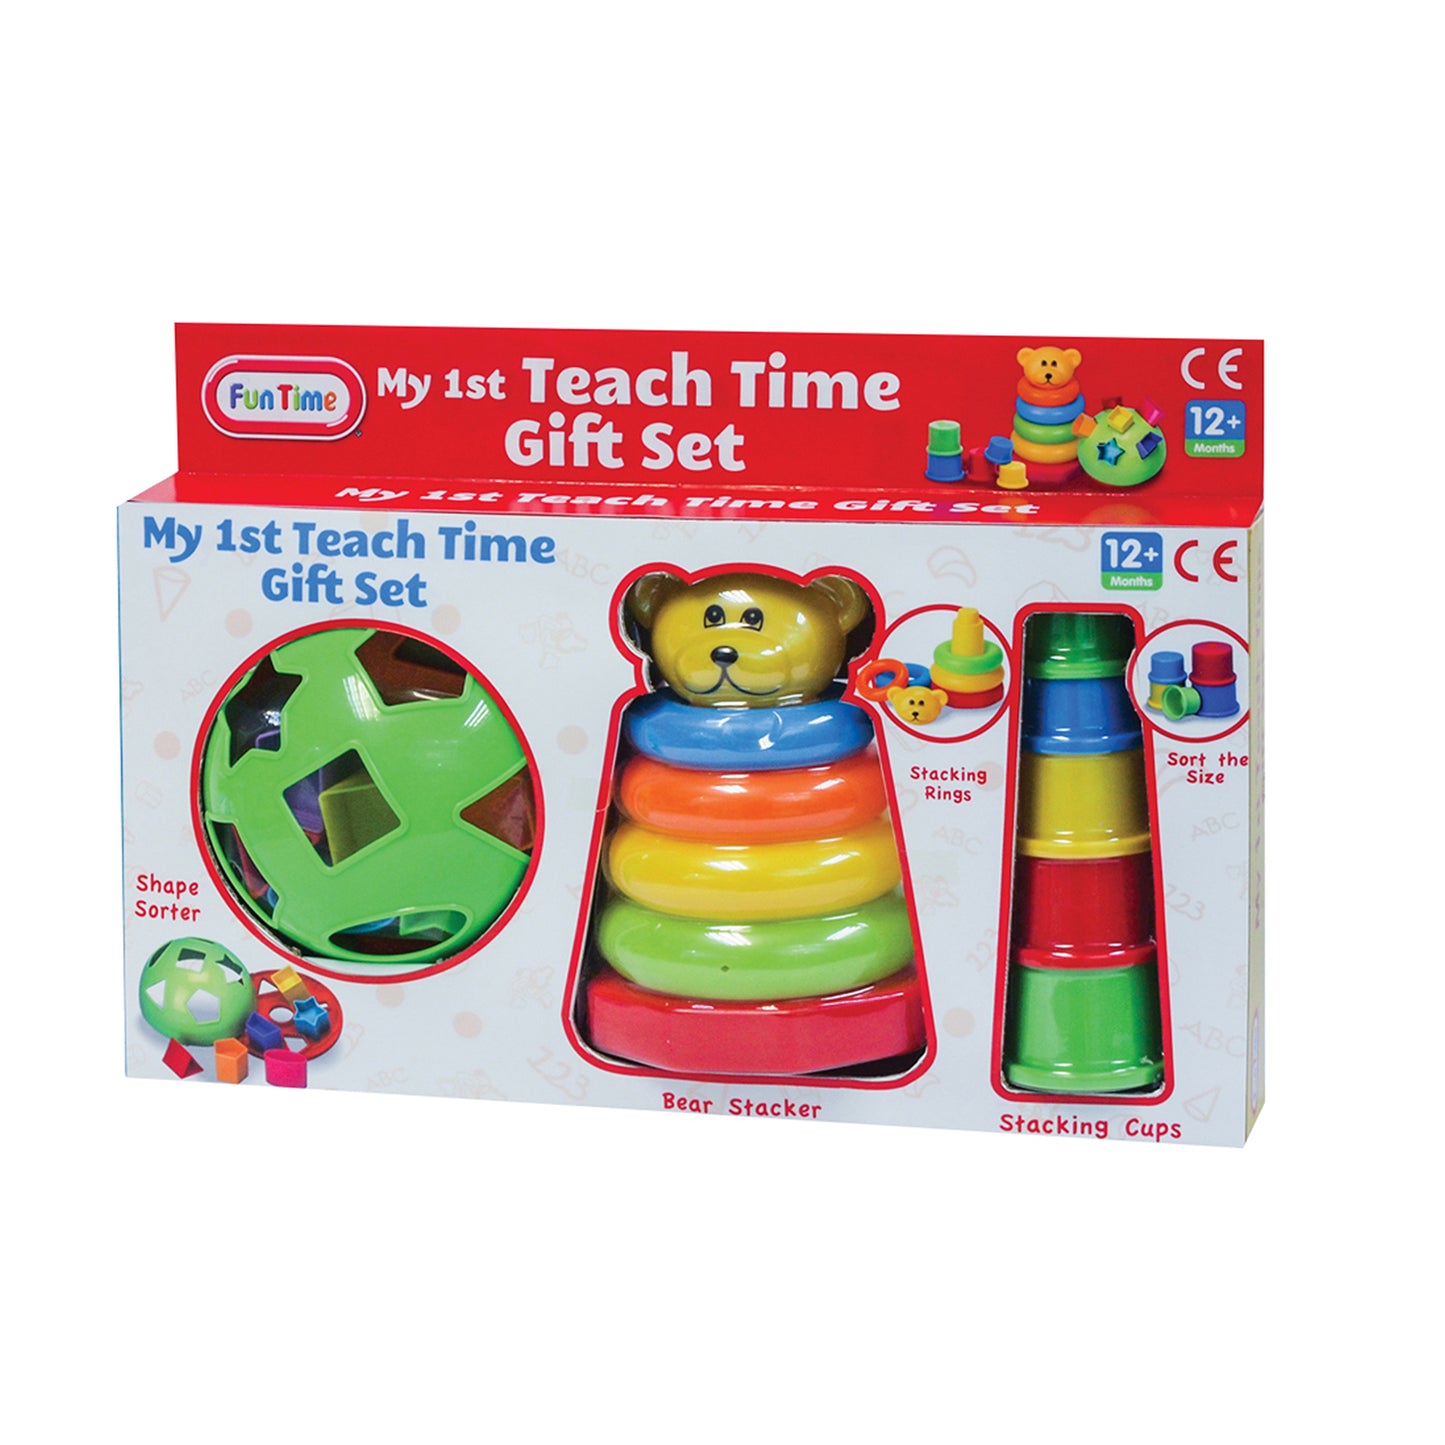 My 1st Teach Time Gift Set